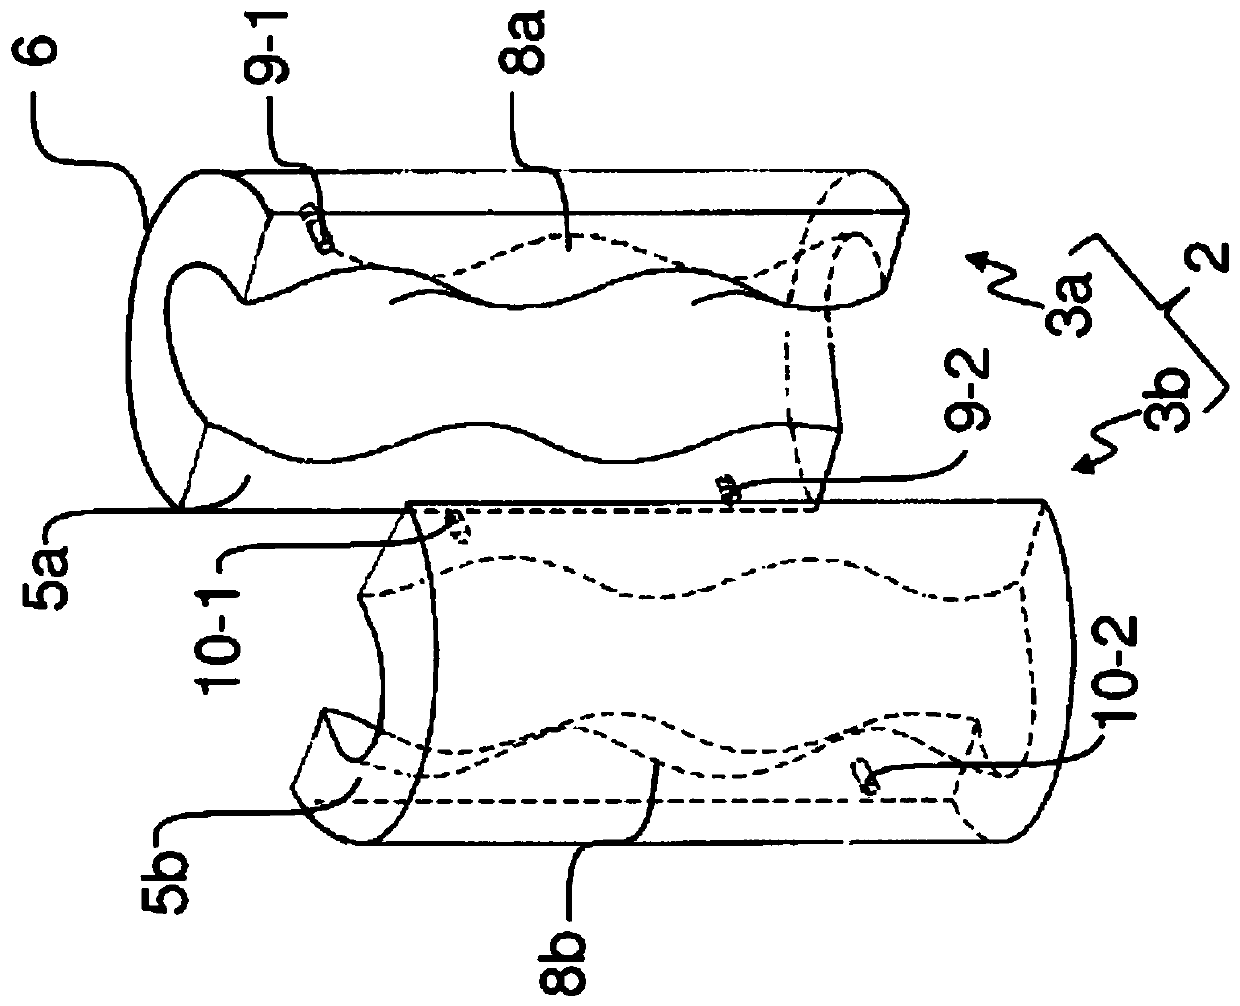 Stator for eccentric screw pump, eccentric screw pump and method of manufacturing stator